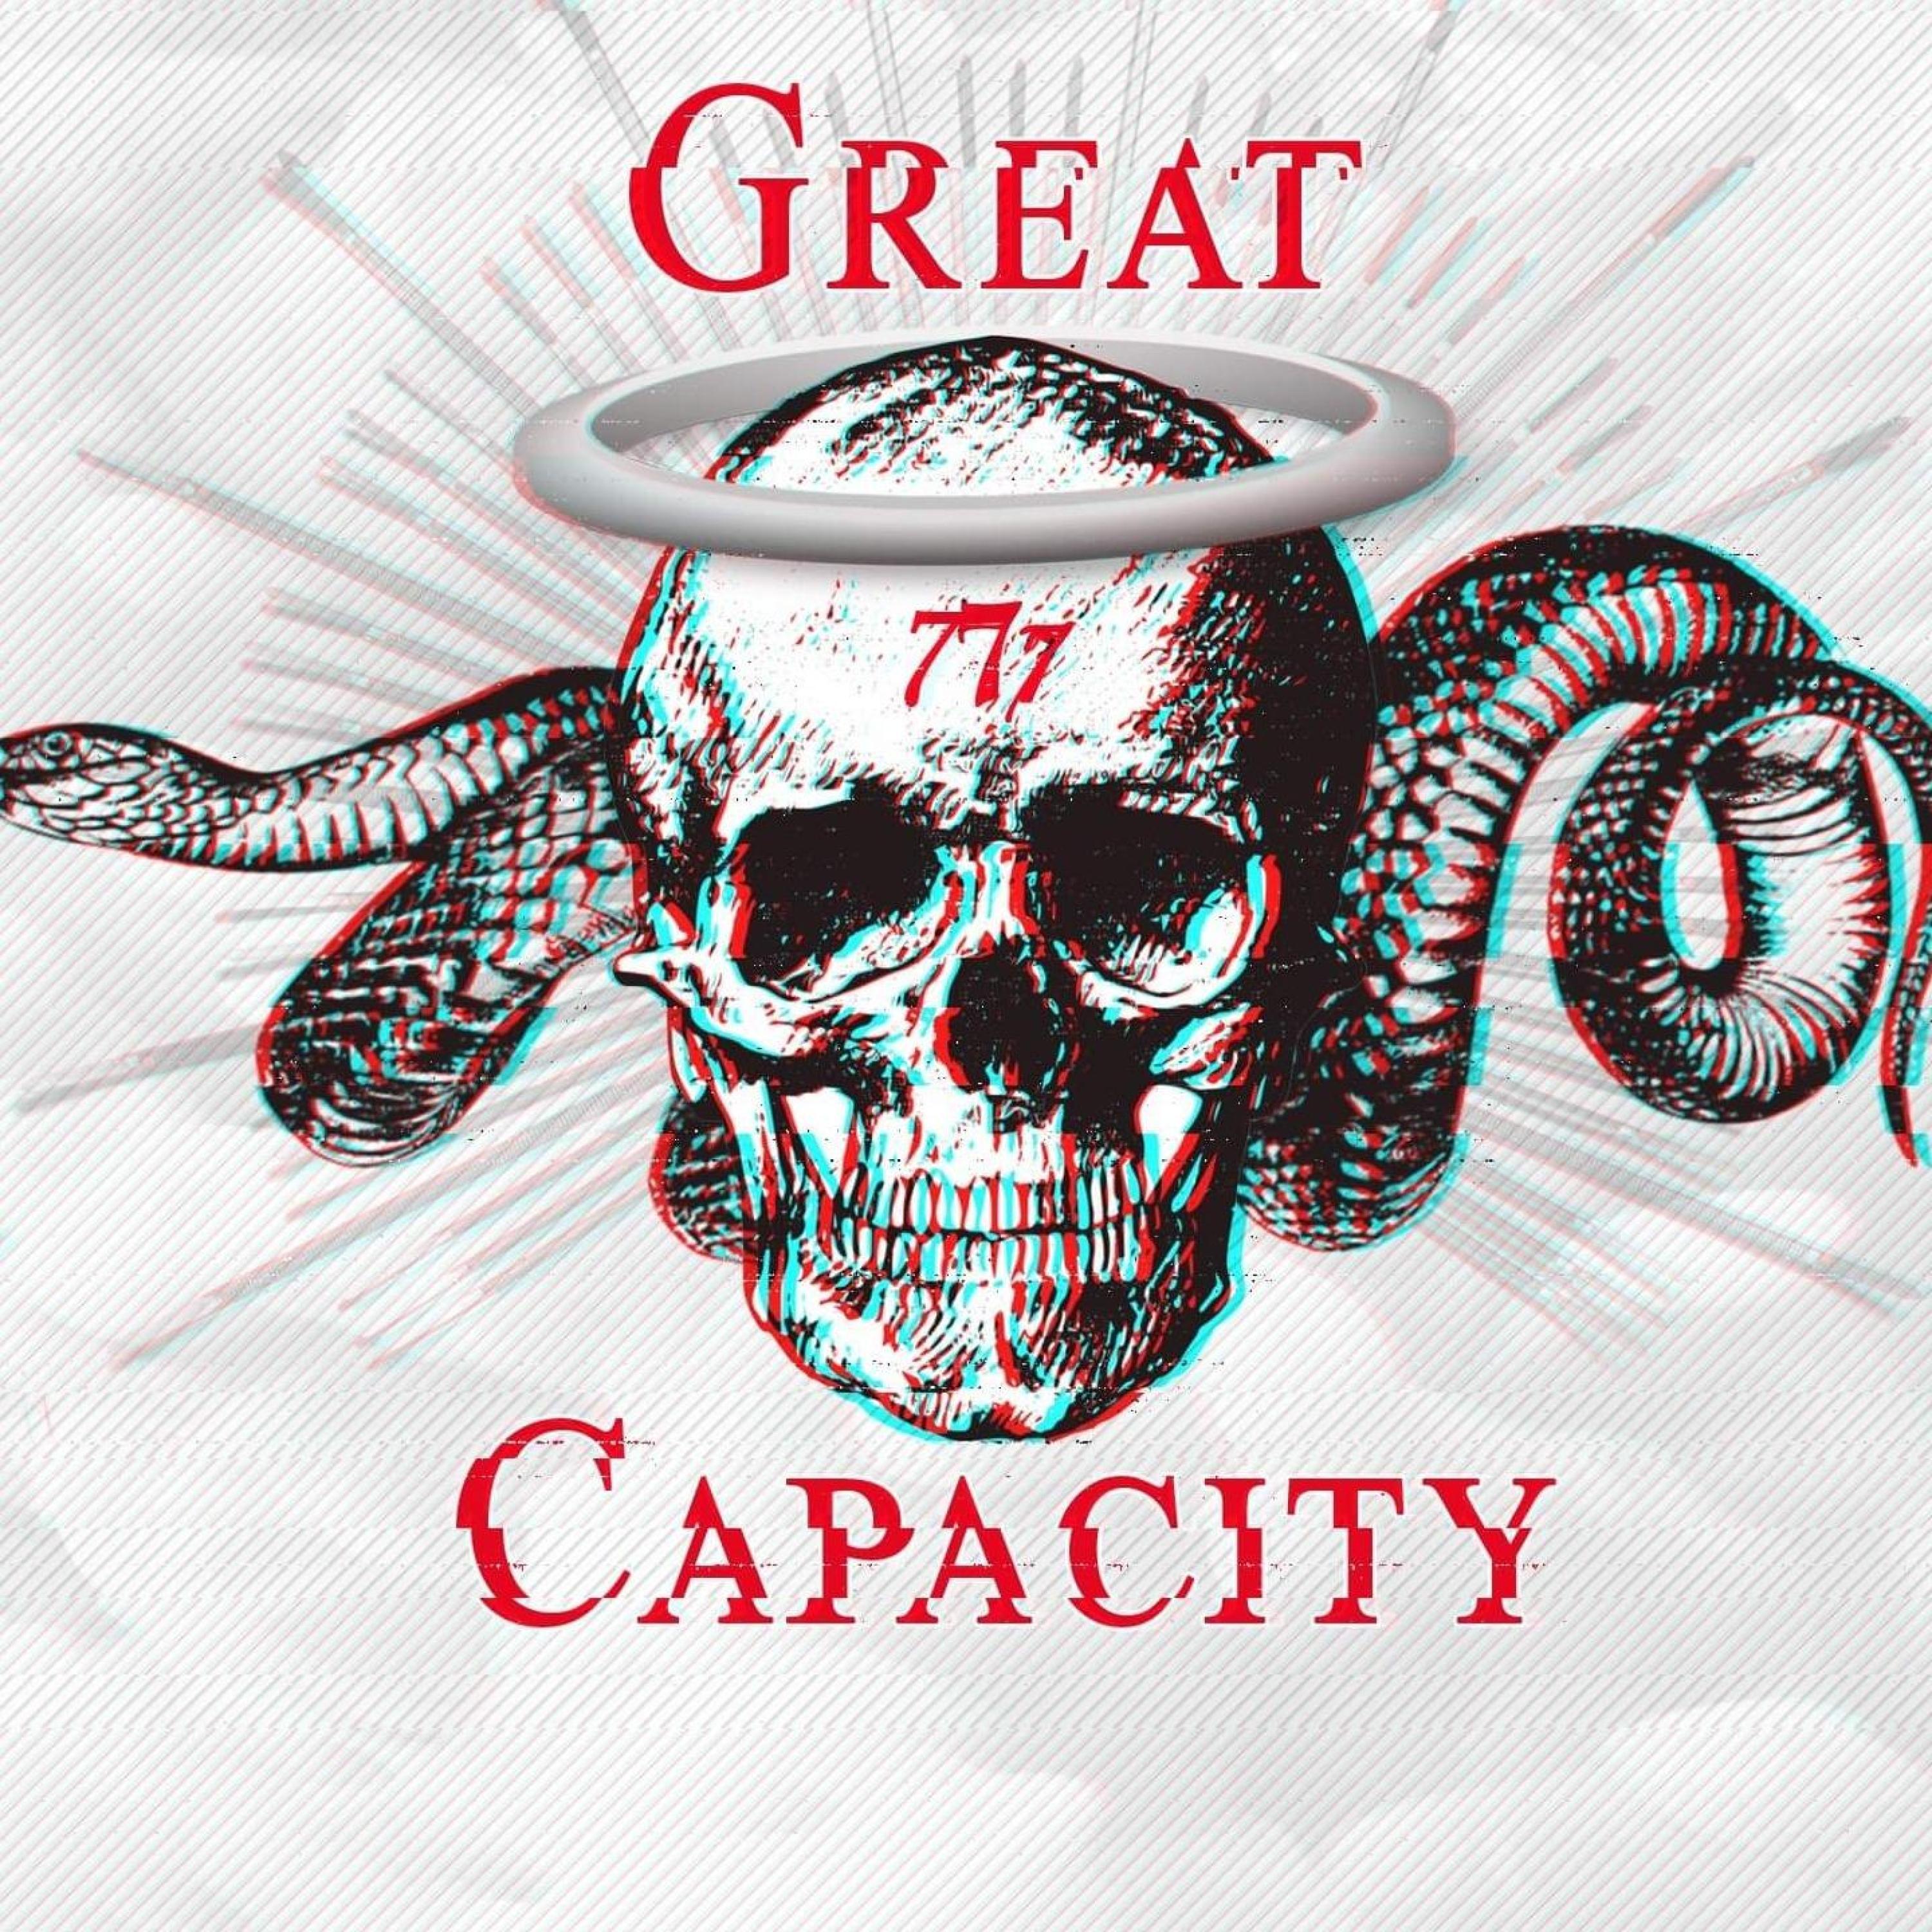 Great Capacity - Ram's Horn